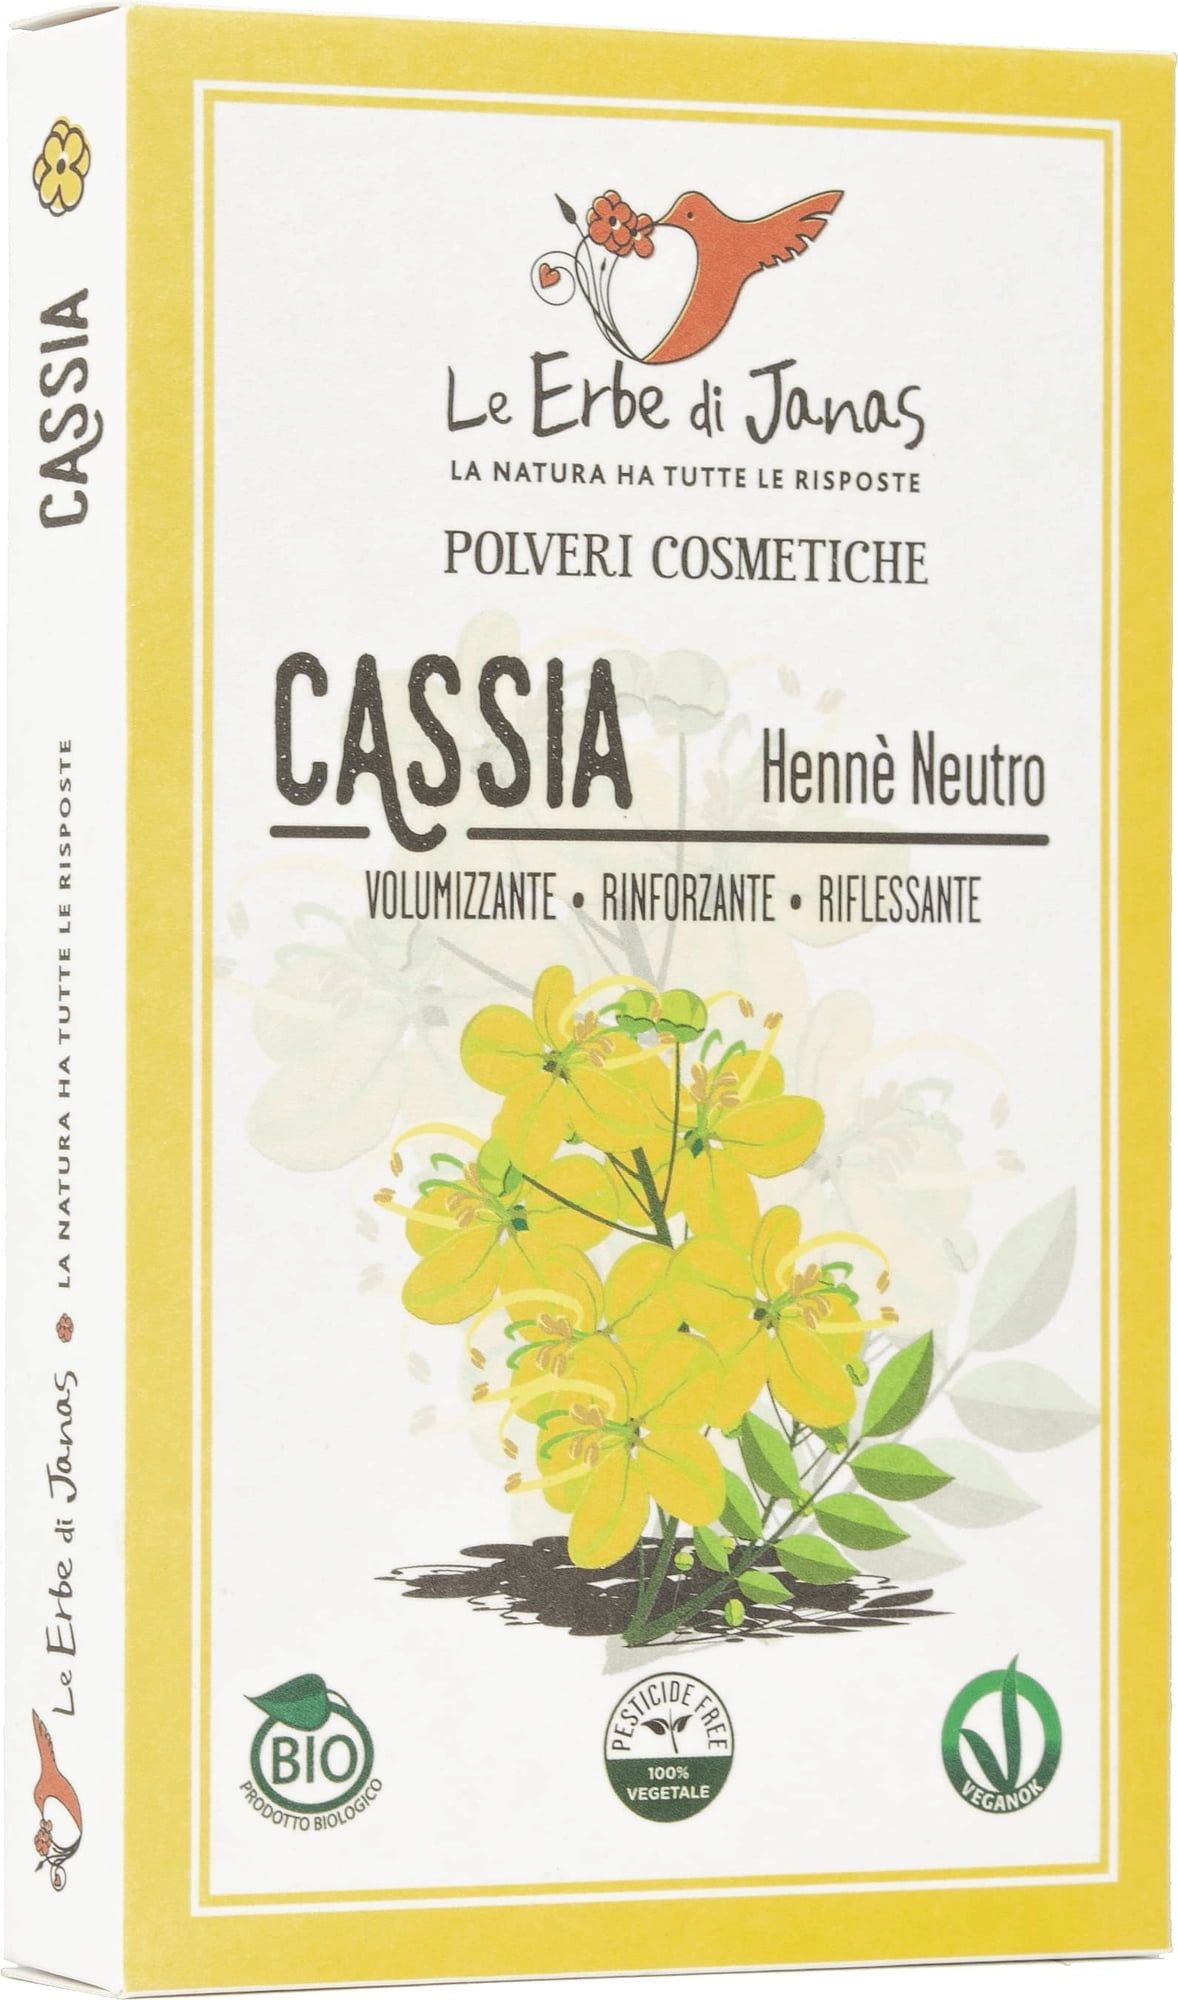 Le Erbe di Janas Cassia (Hennè Neutro) - 100 g